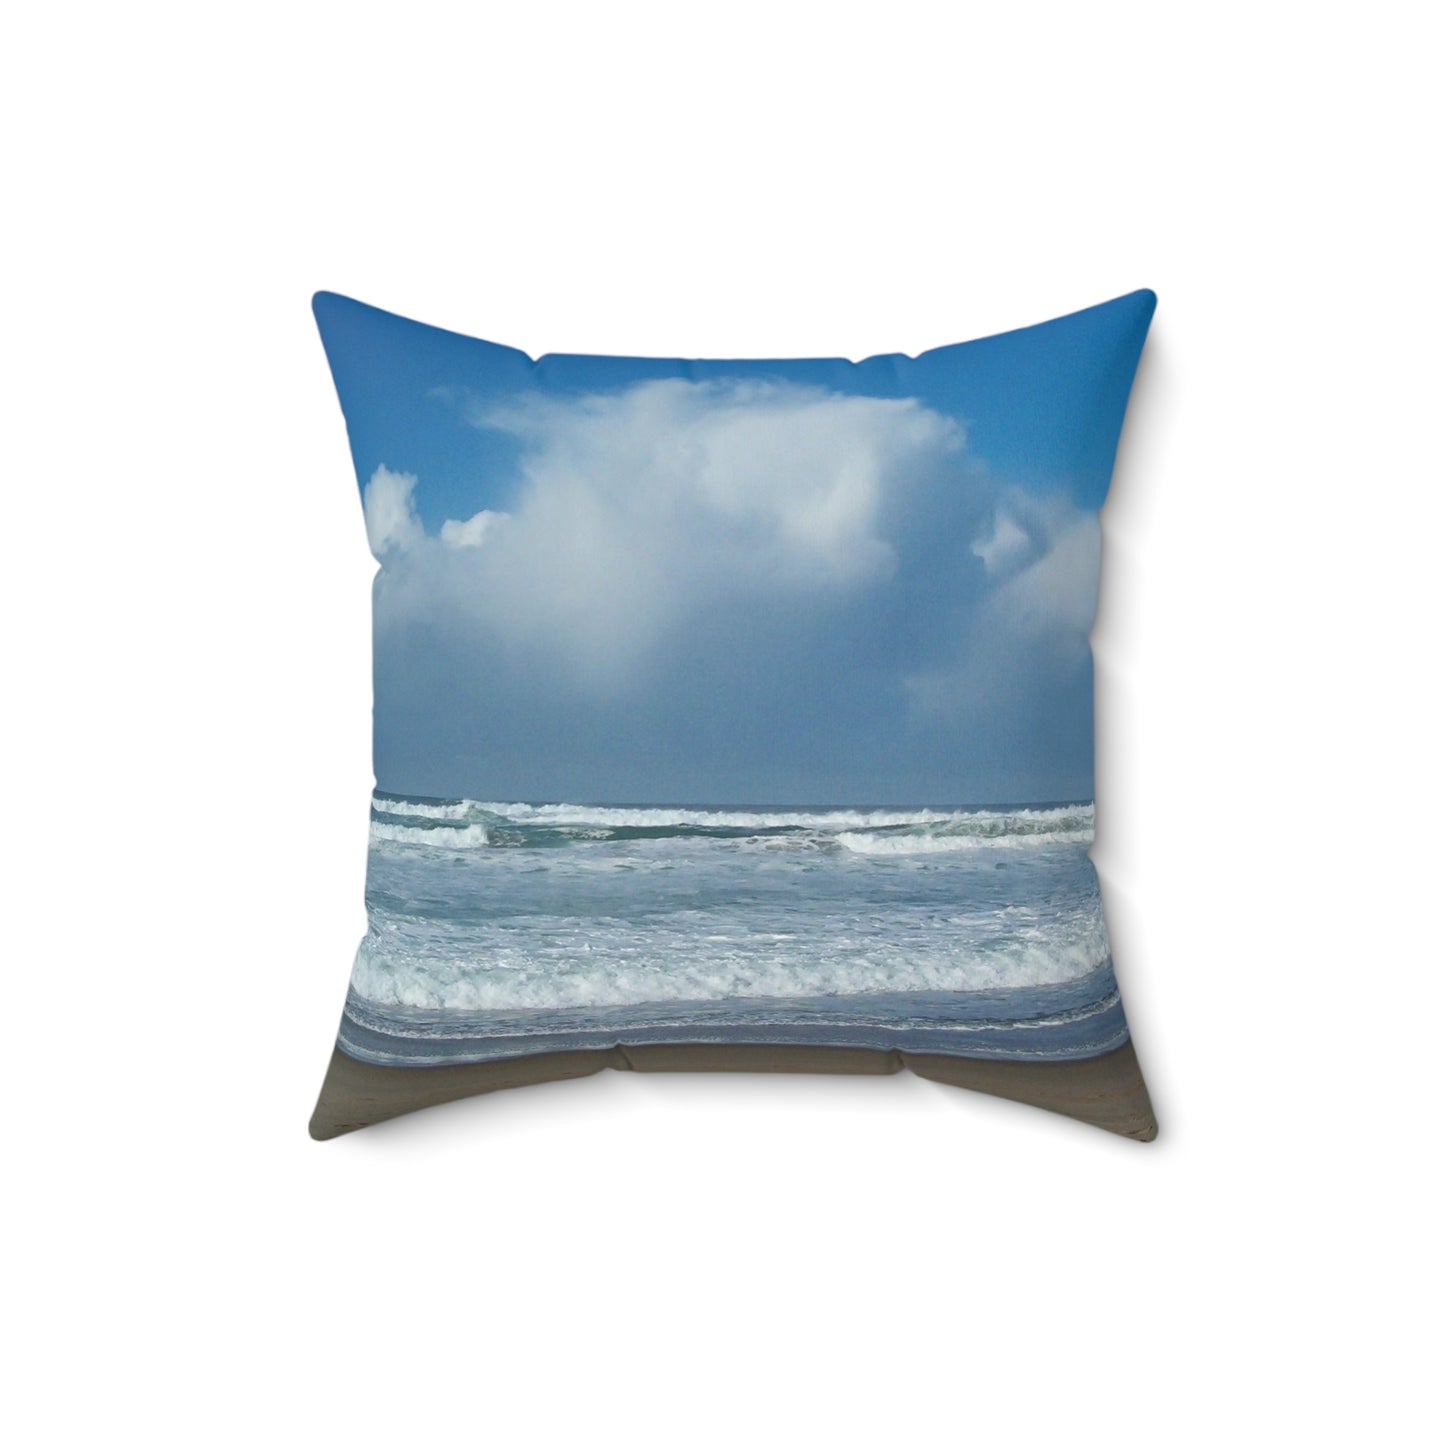 Blue Sky Beach Spun Polyester Square Pillow